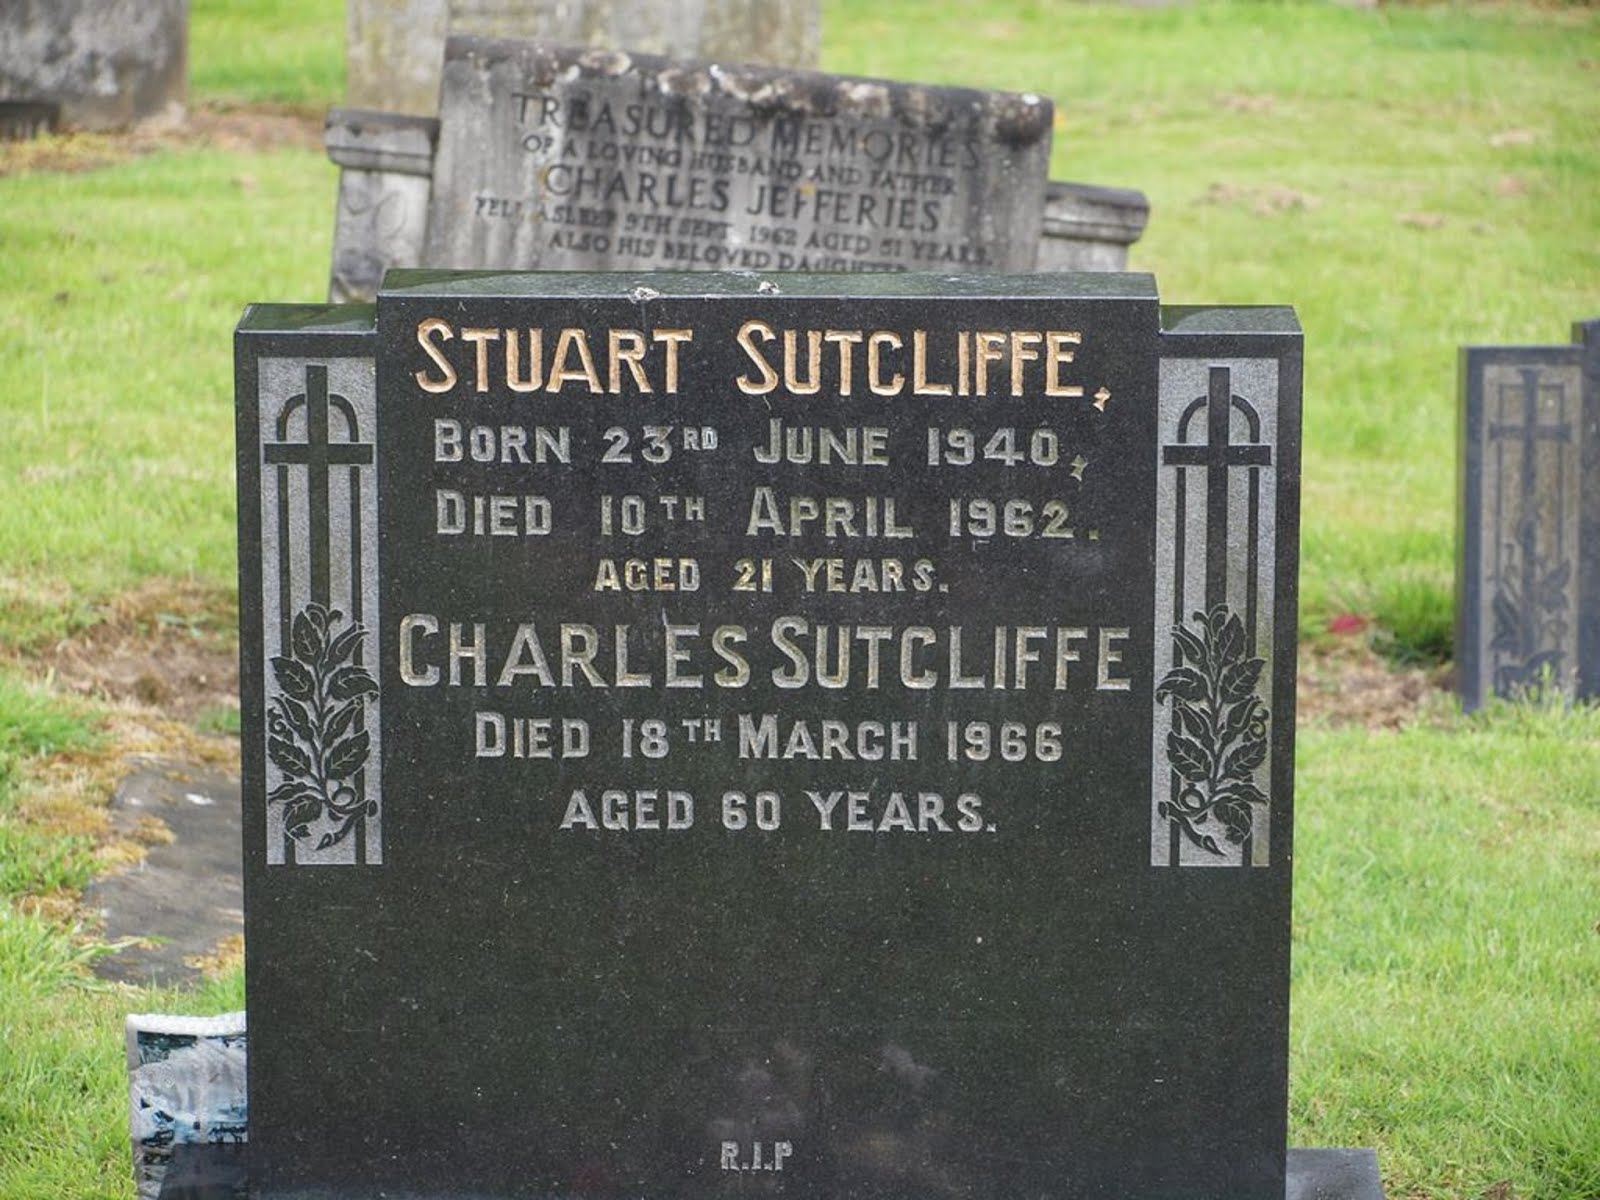 STUART SUTCLIFFE  GRAVESTONE  1st BEATLE BASS GUITAR PLAYER BEATEN TO DEATH BEFORE PAUL McCARTNEY